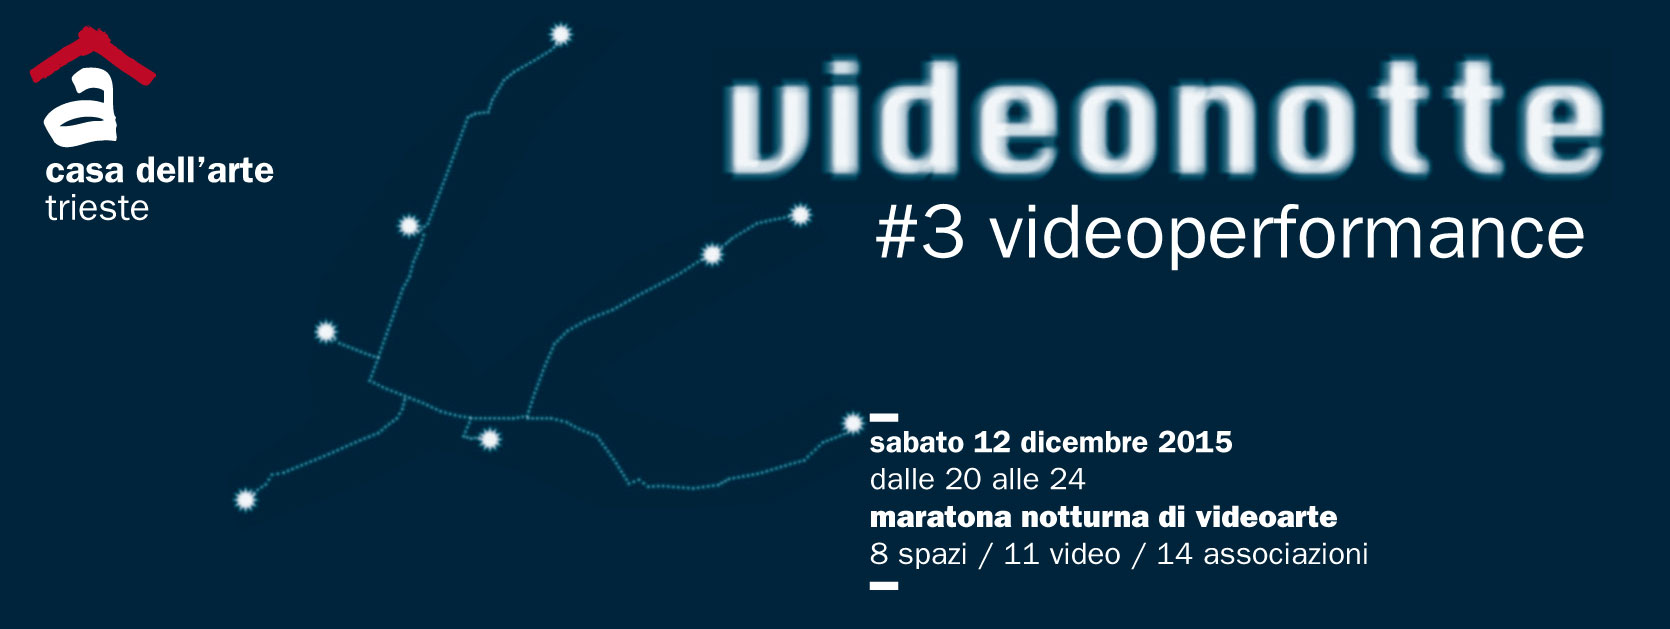 VIDEONOTTE-3-videoperformance